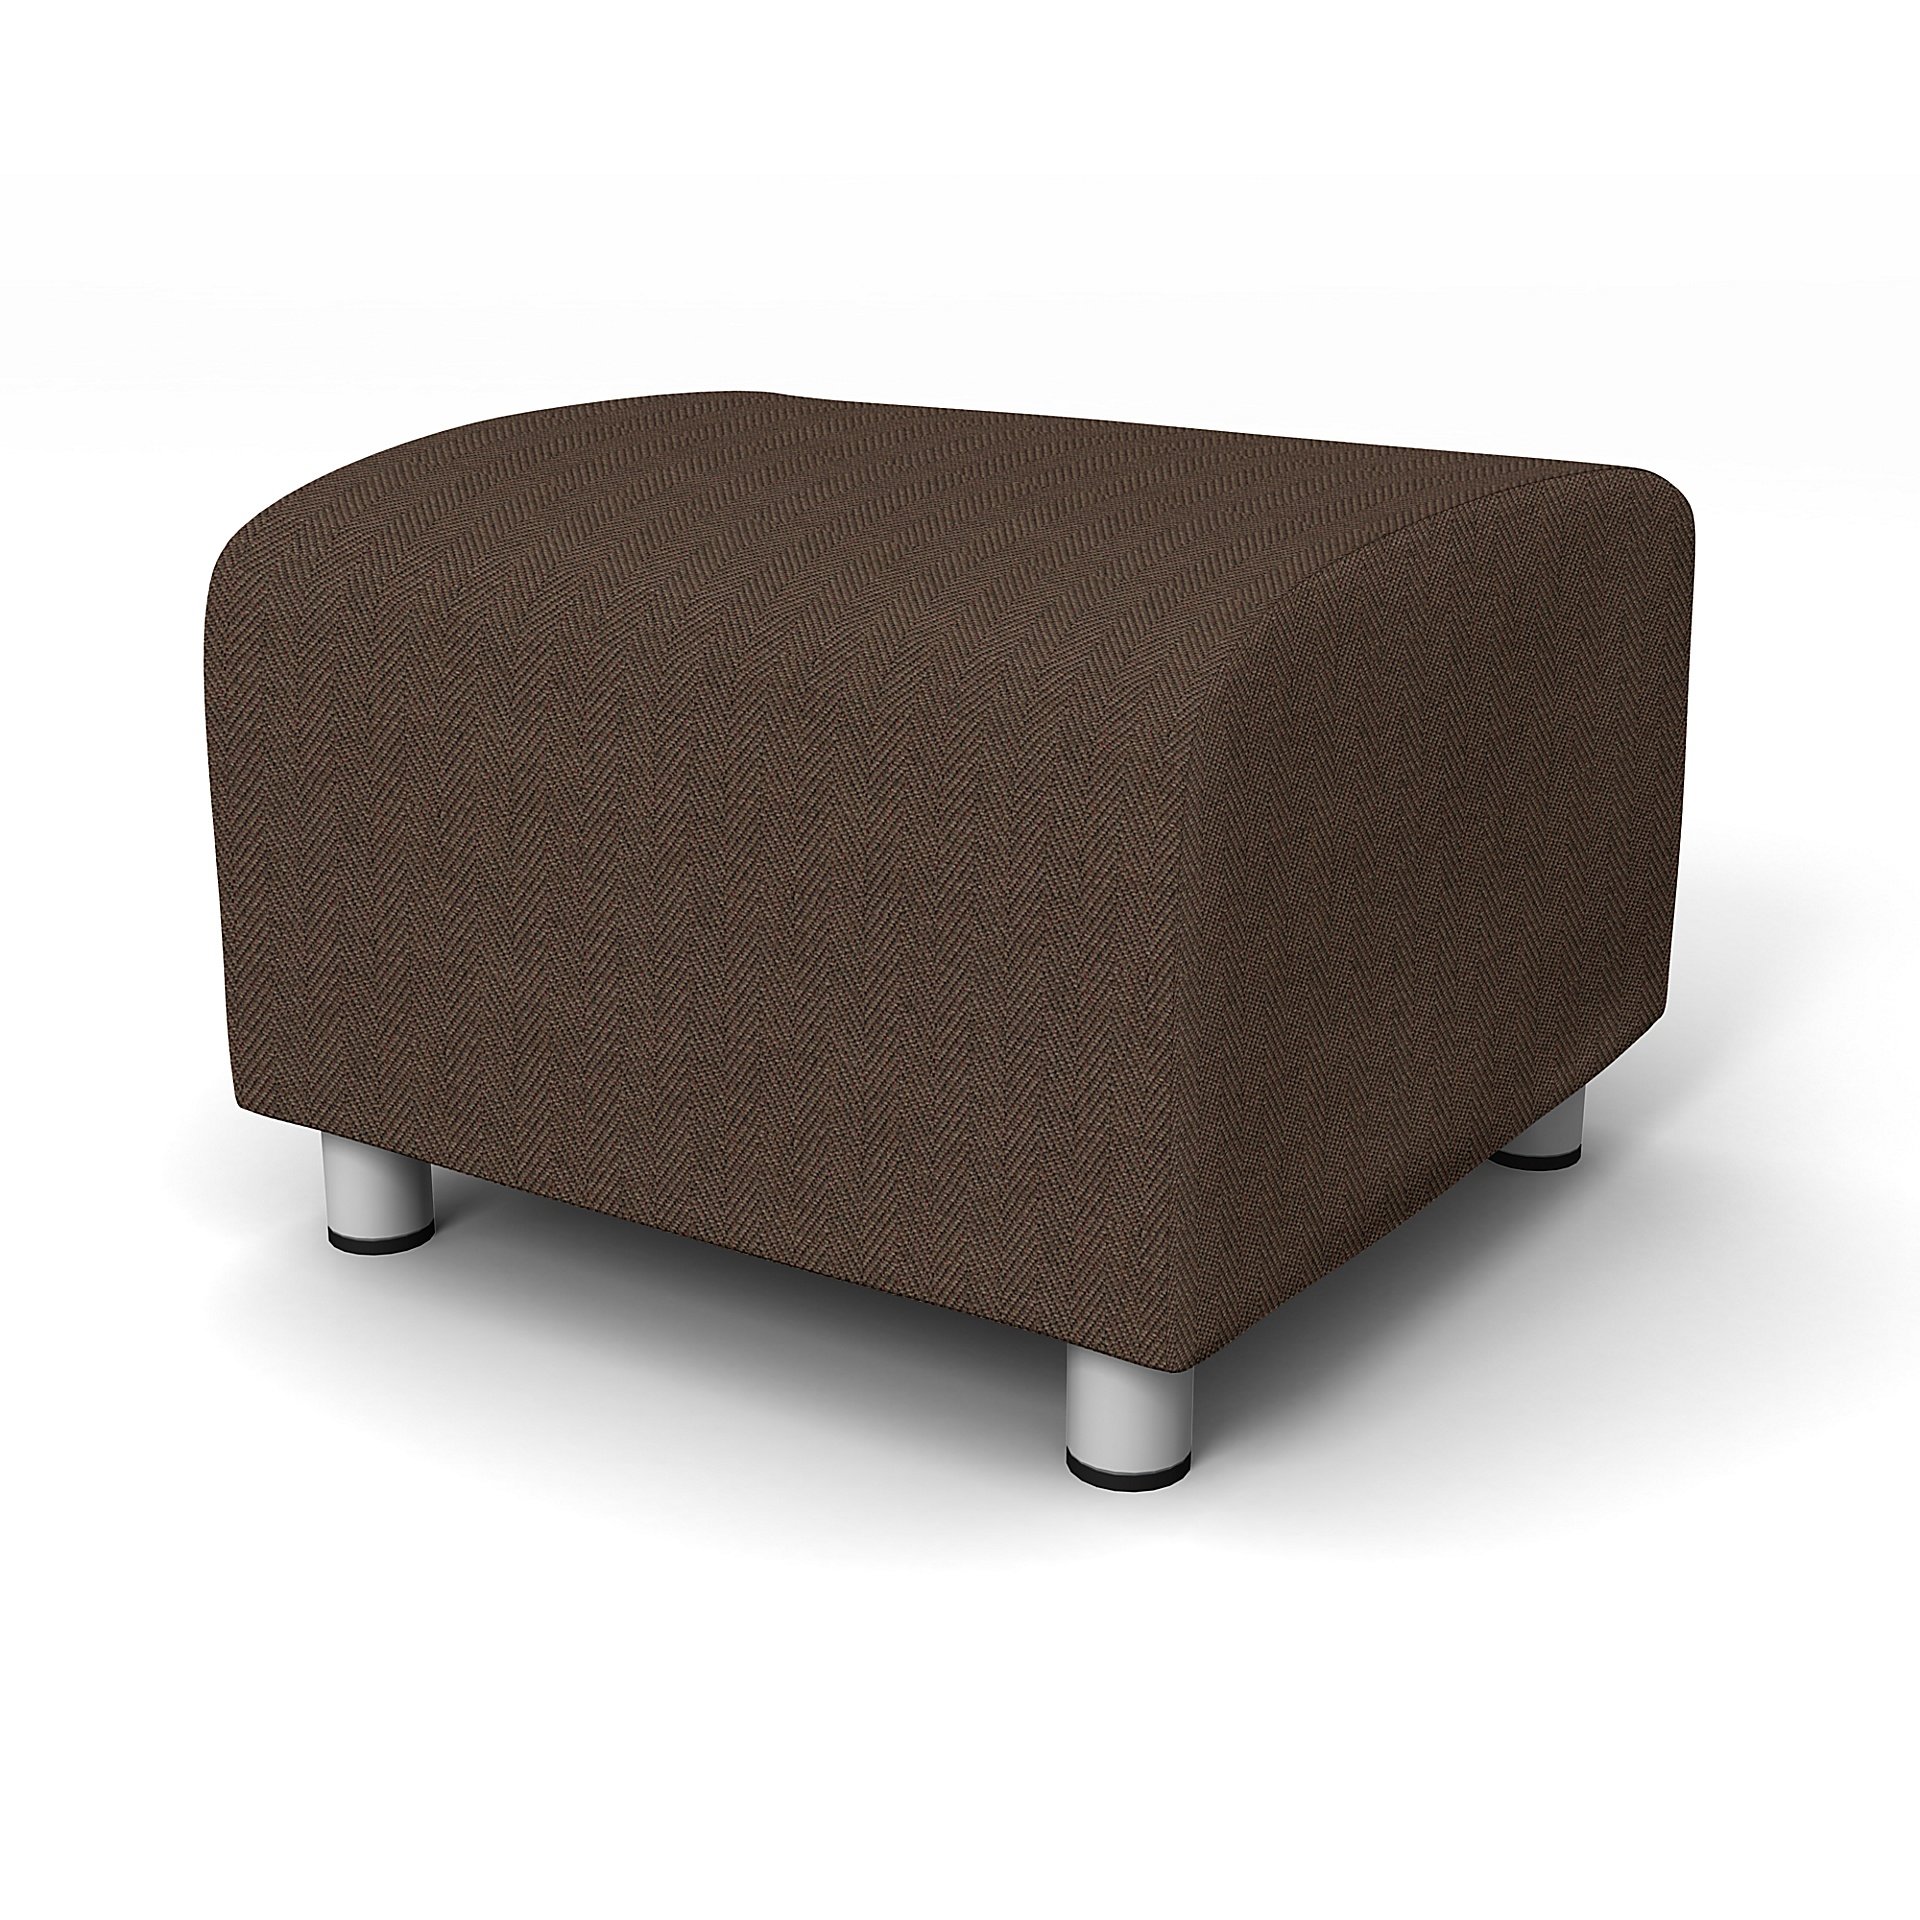 IKEA - Klippan Footstool Cover, Chocolate, Boucle & Texture - Bemz